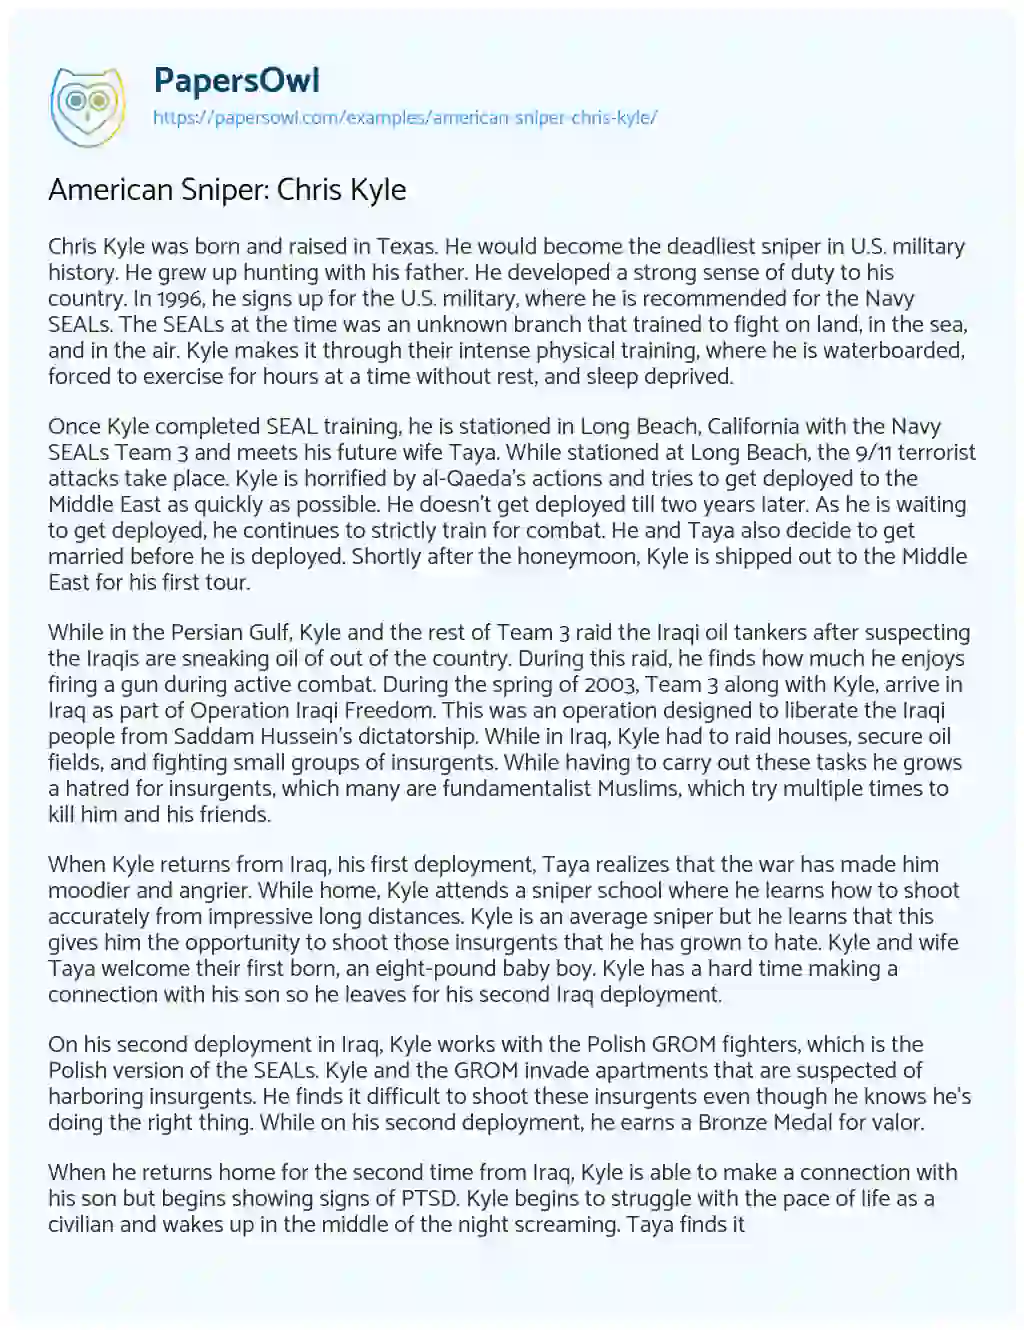 Essay on American Sniper: Chris Kyle